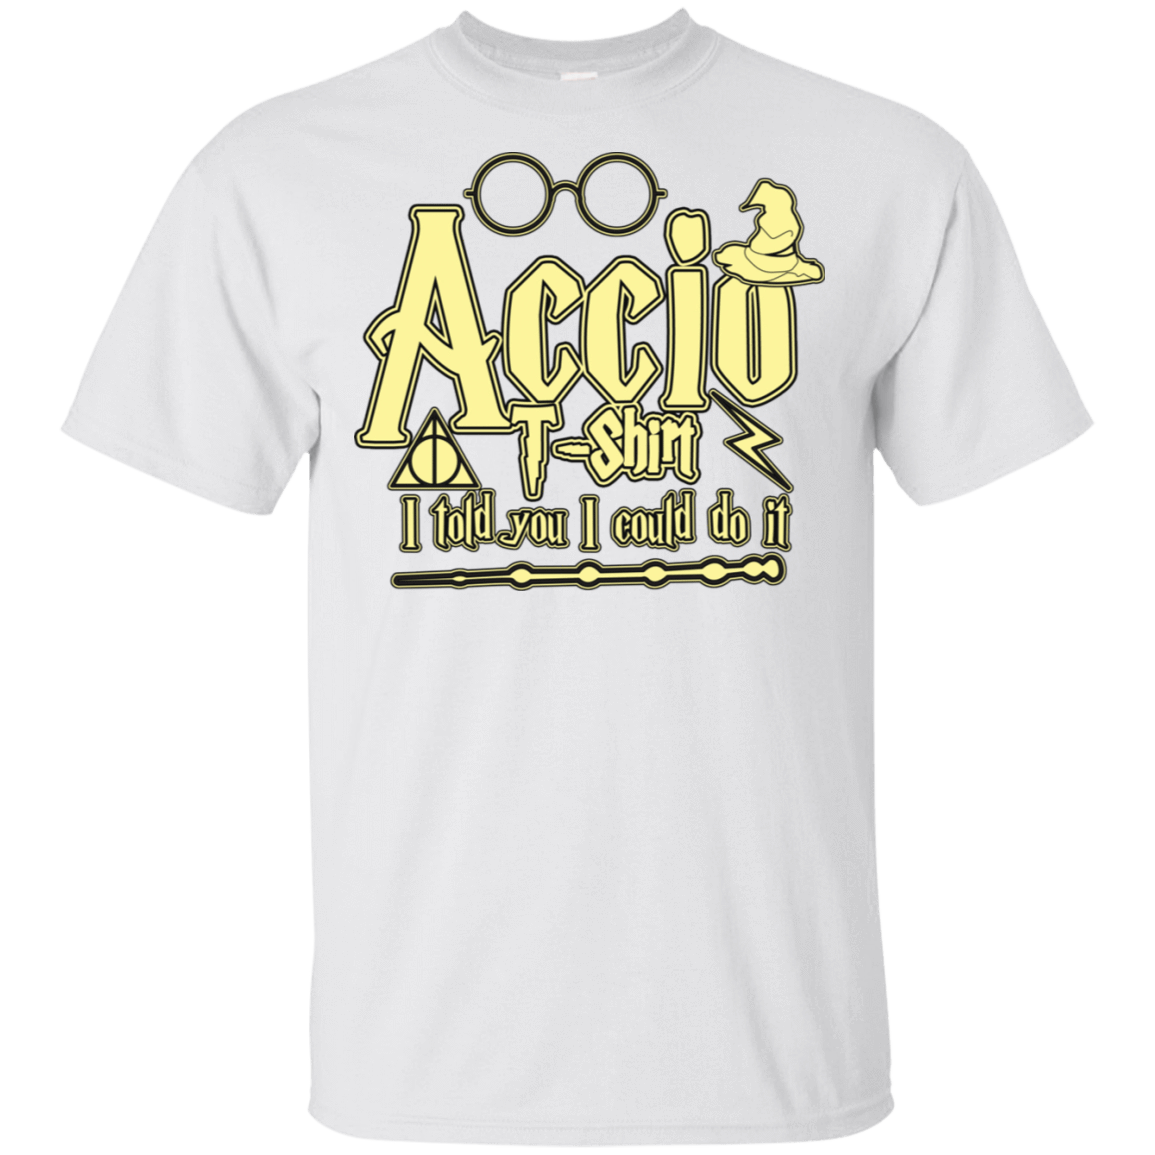 T-Shirts White / S Accio T-Shirt